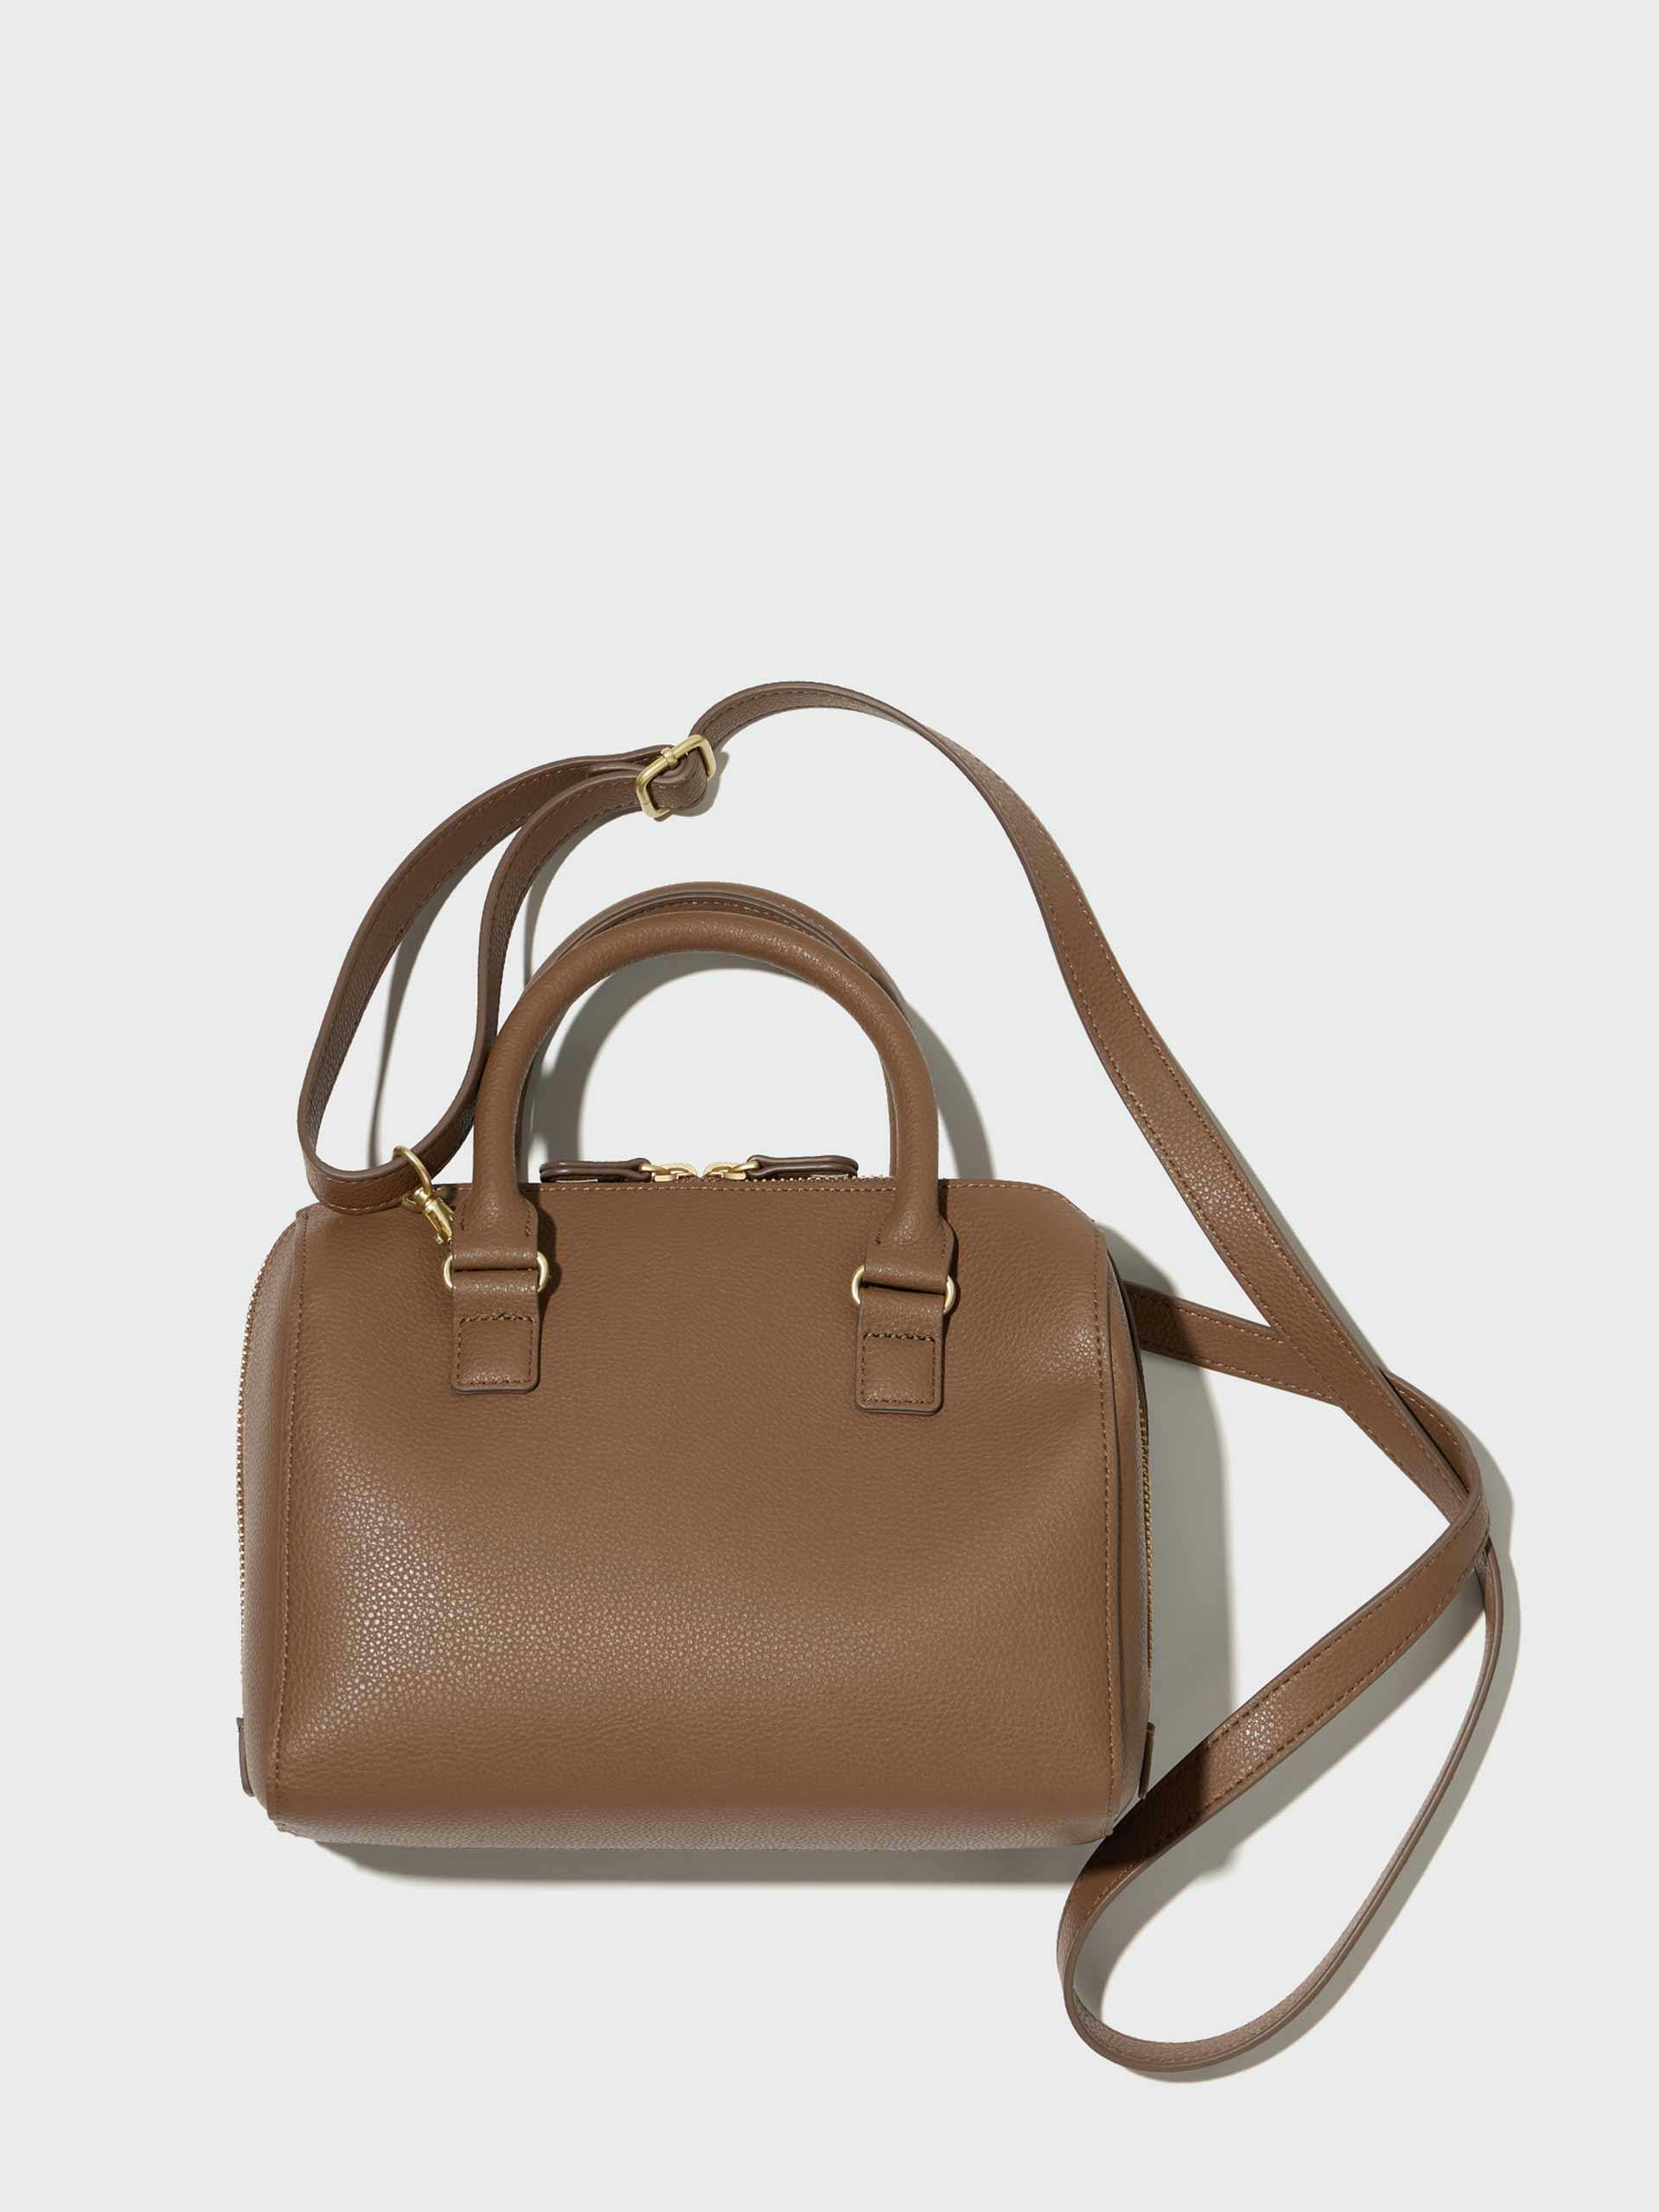 Brown leather top-handle bag